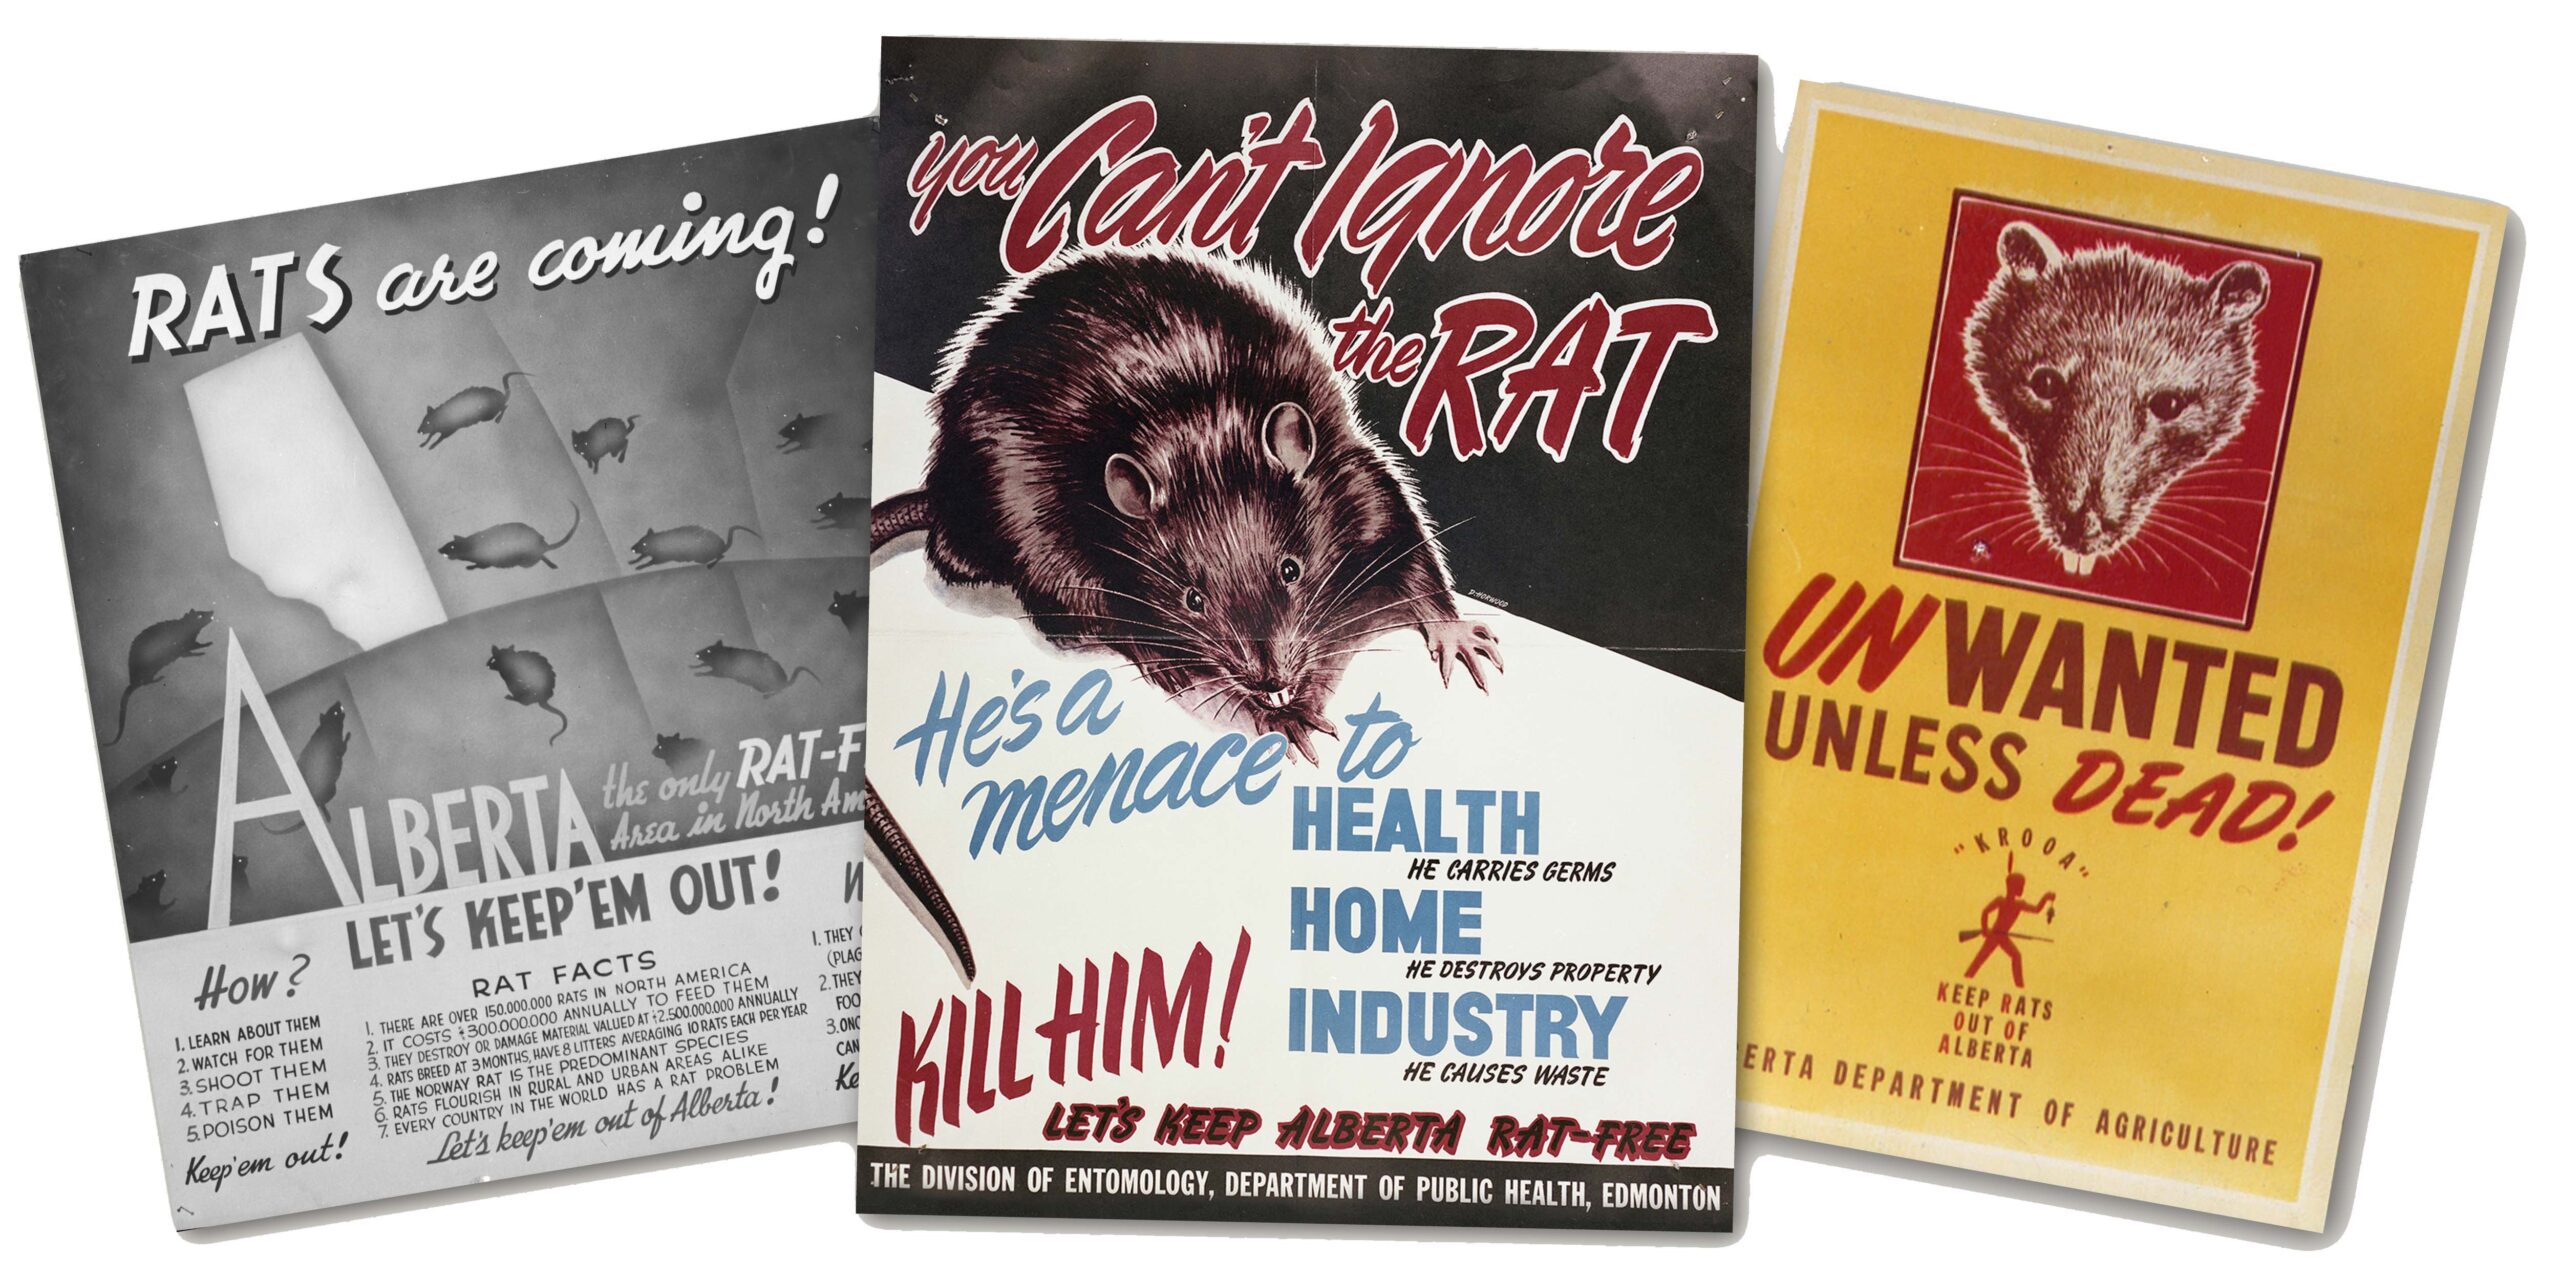 Alberta Rat Control Posters Scaled 